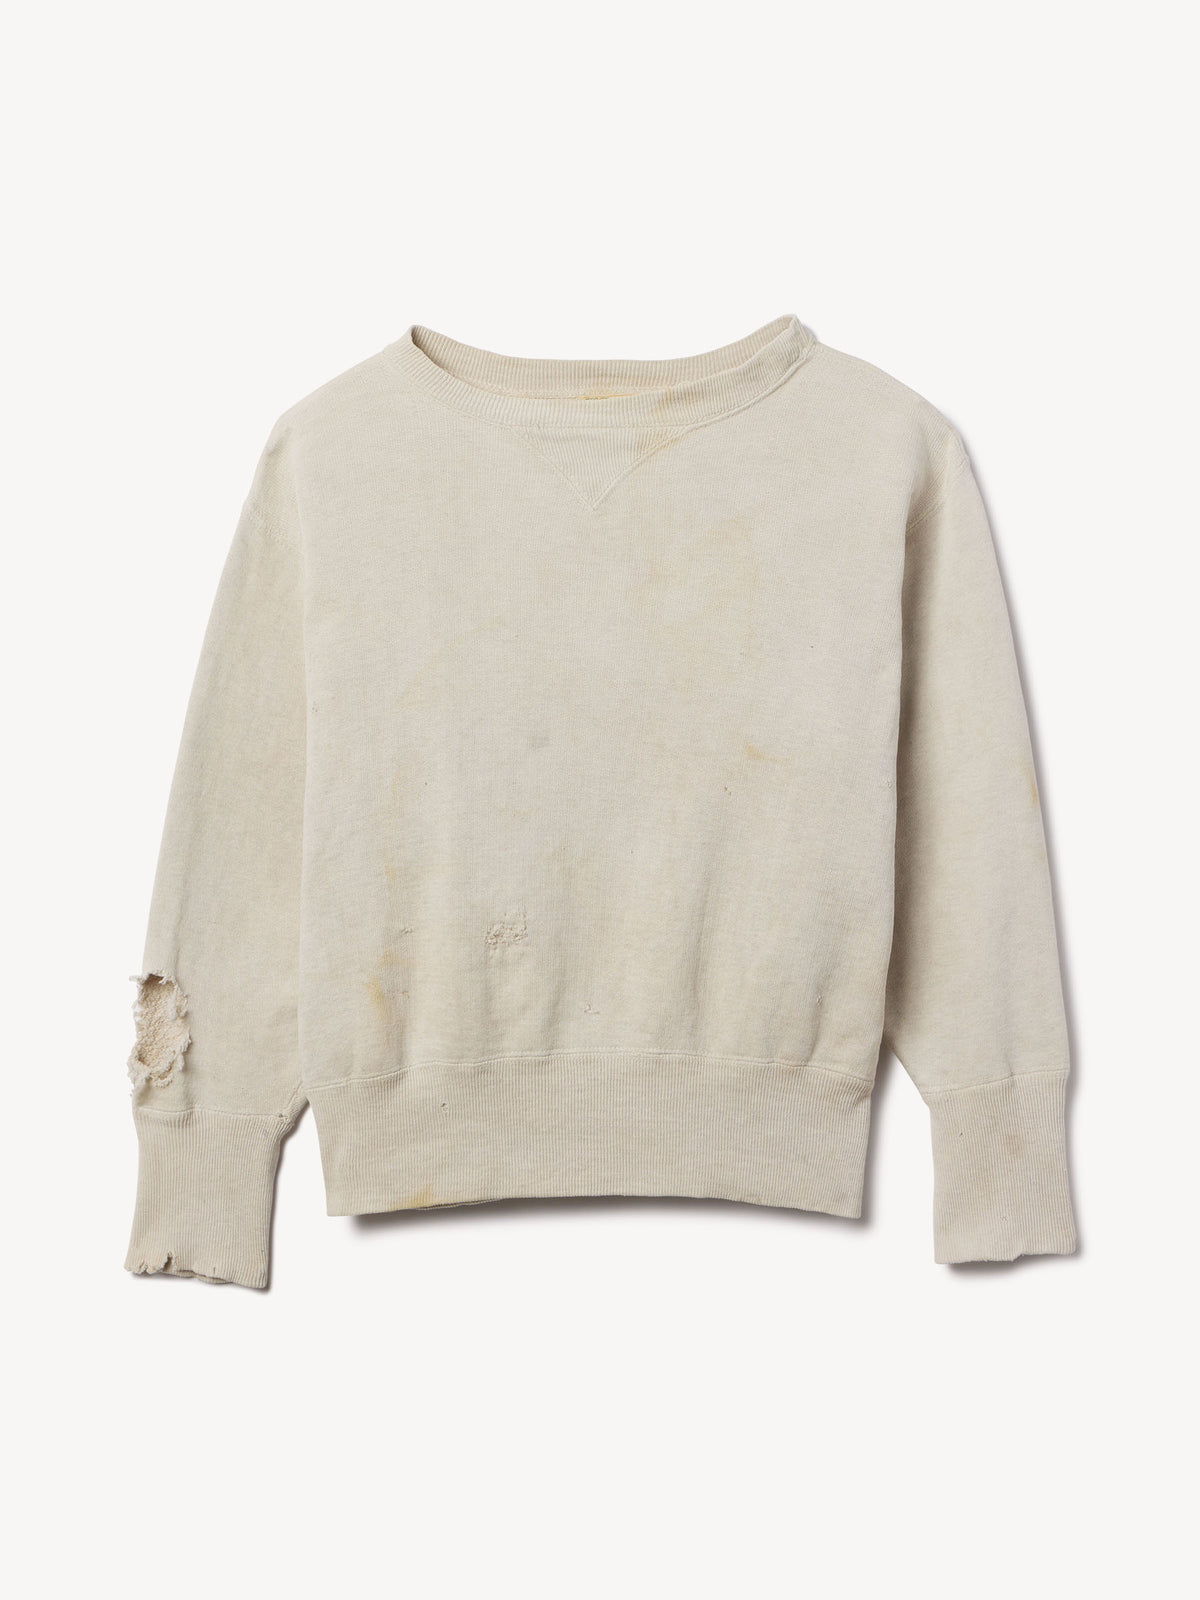 JC Penney's Crewneck Sweatshirt - 0232 - Product Flat